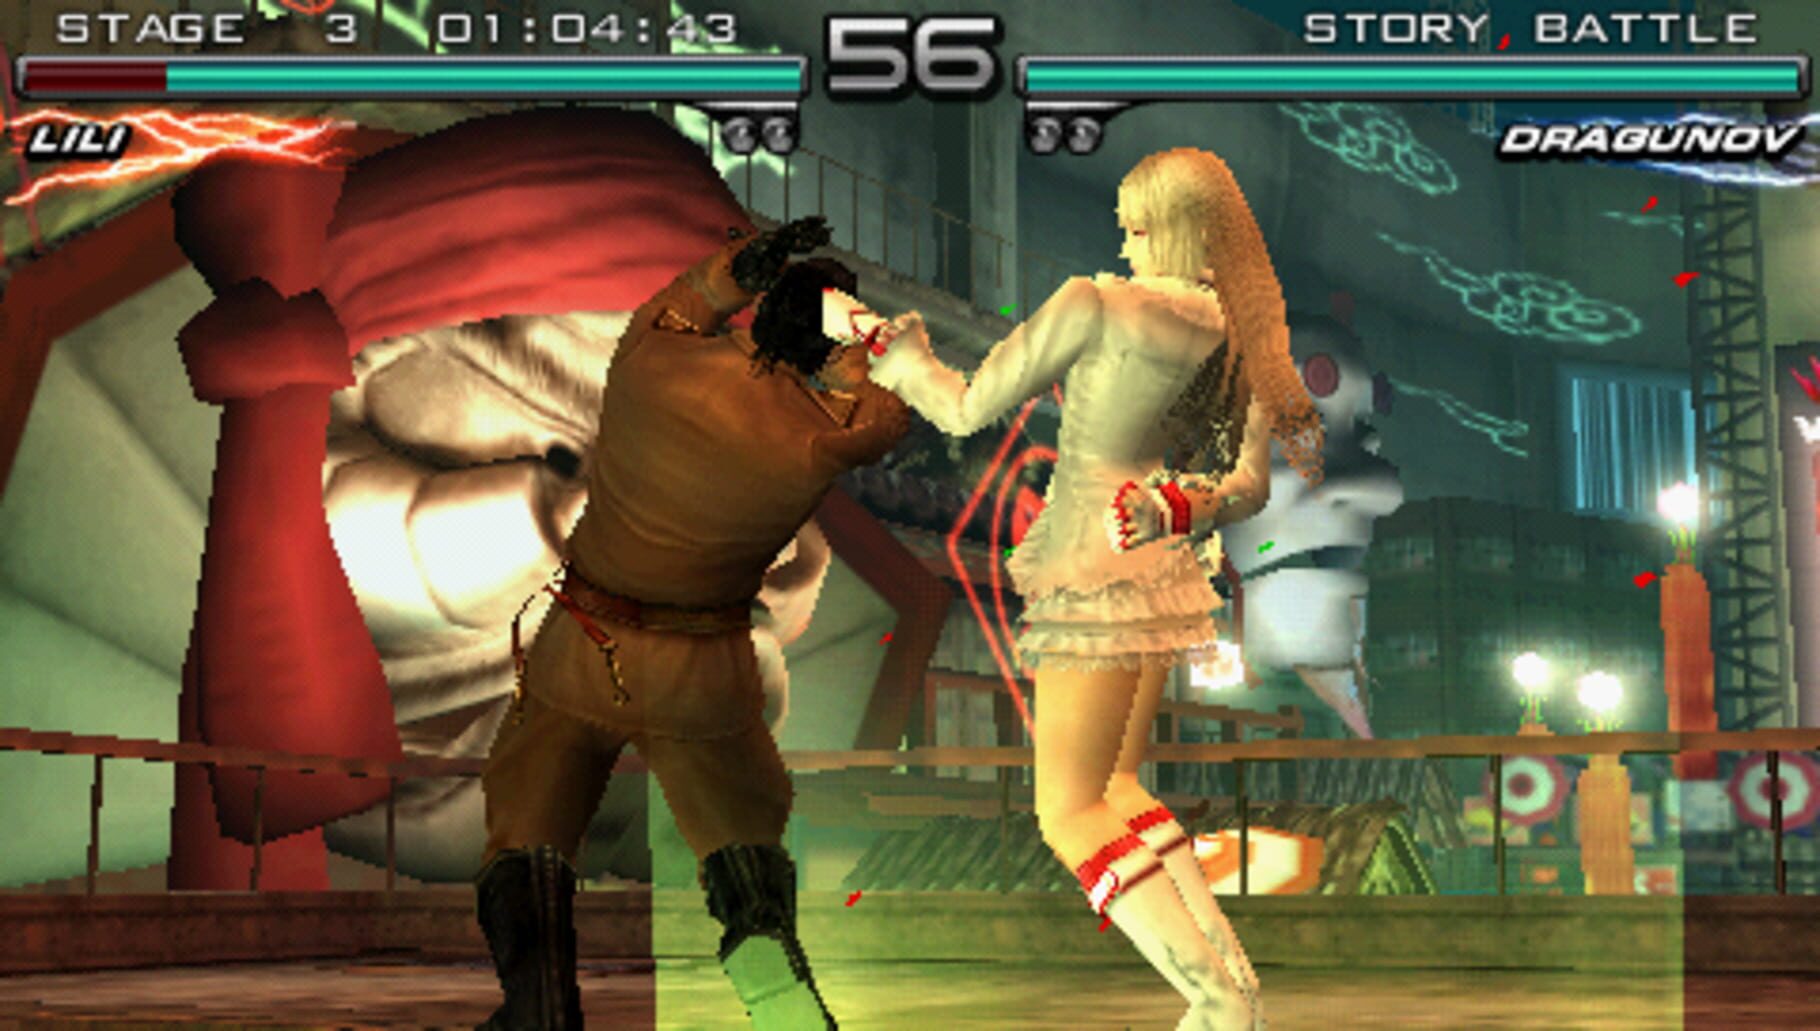 Tekken: Dark Resurrection Image